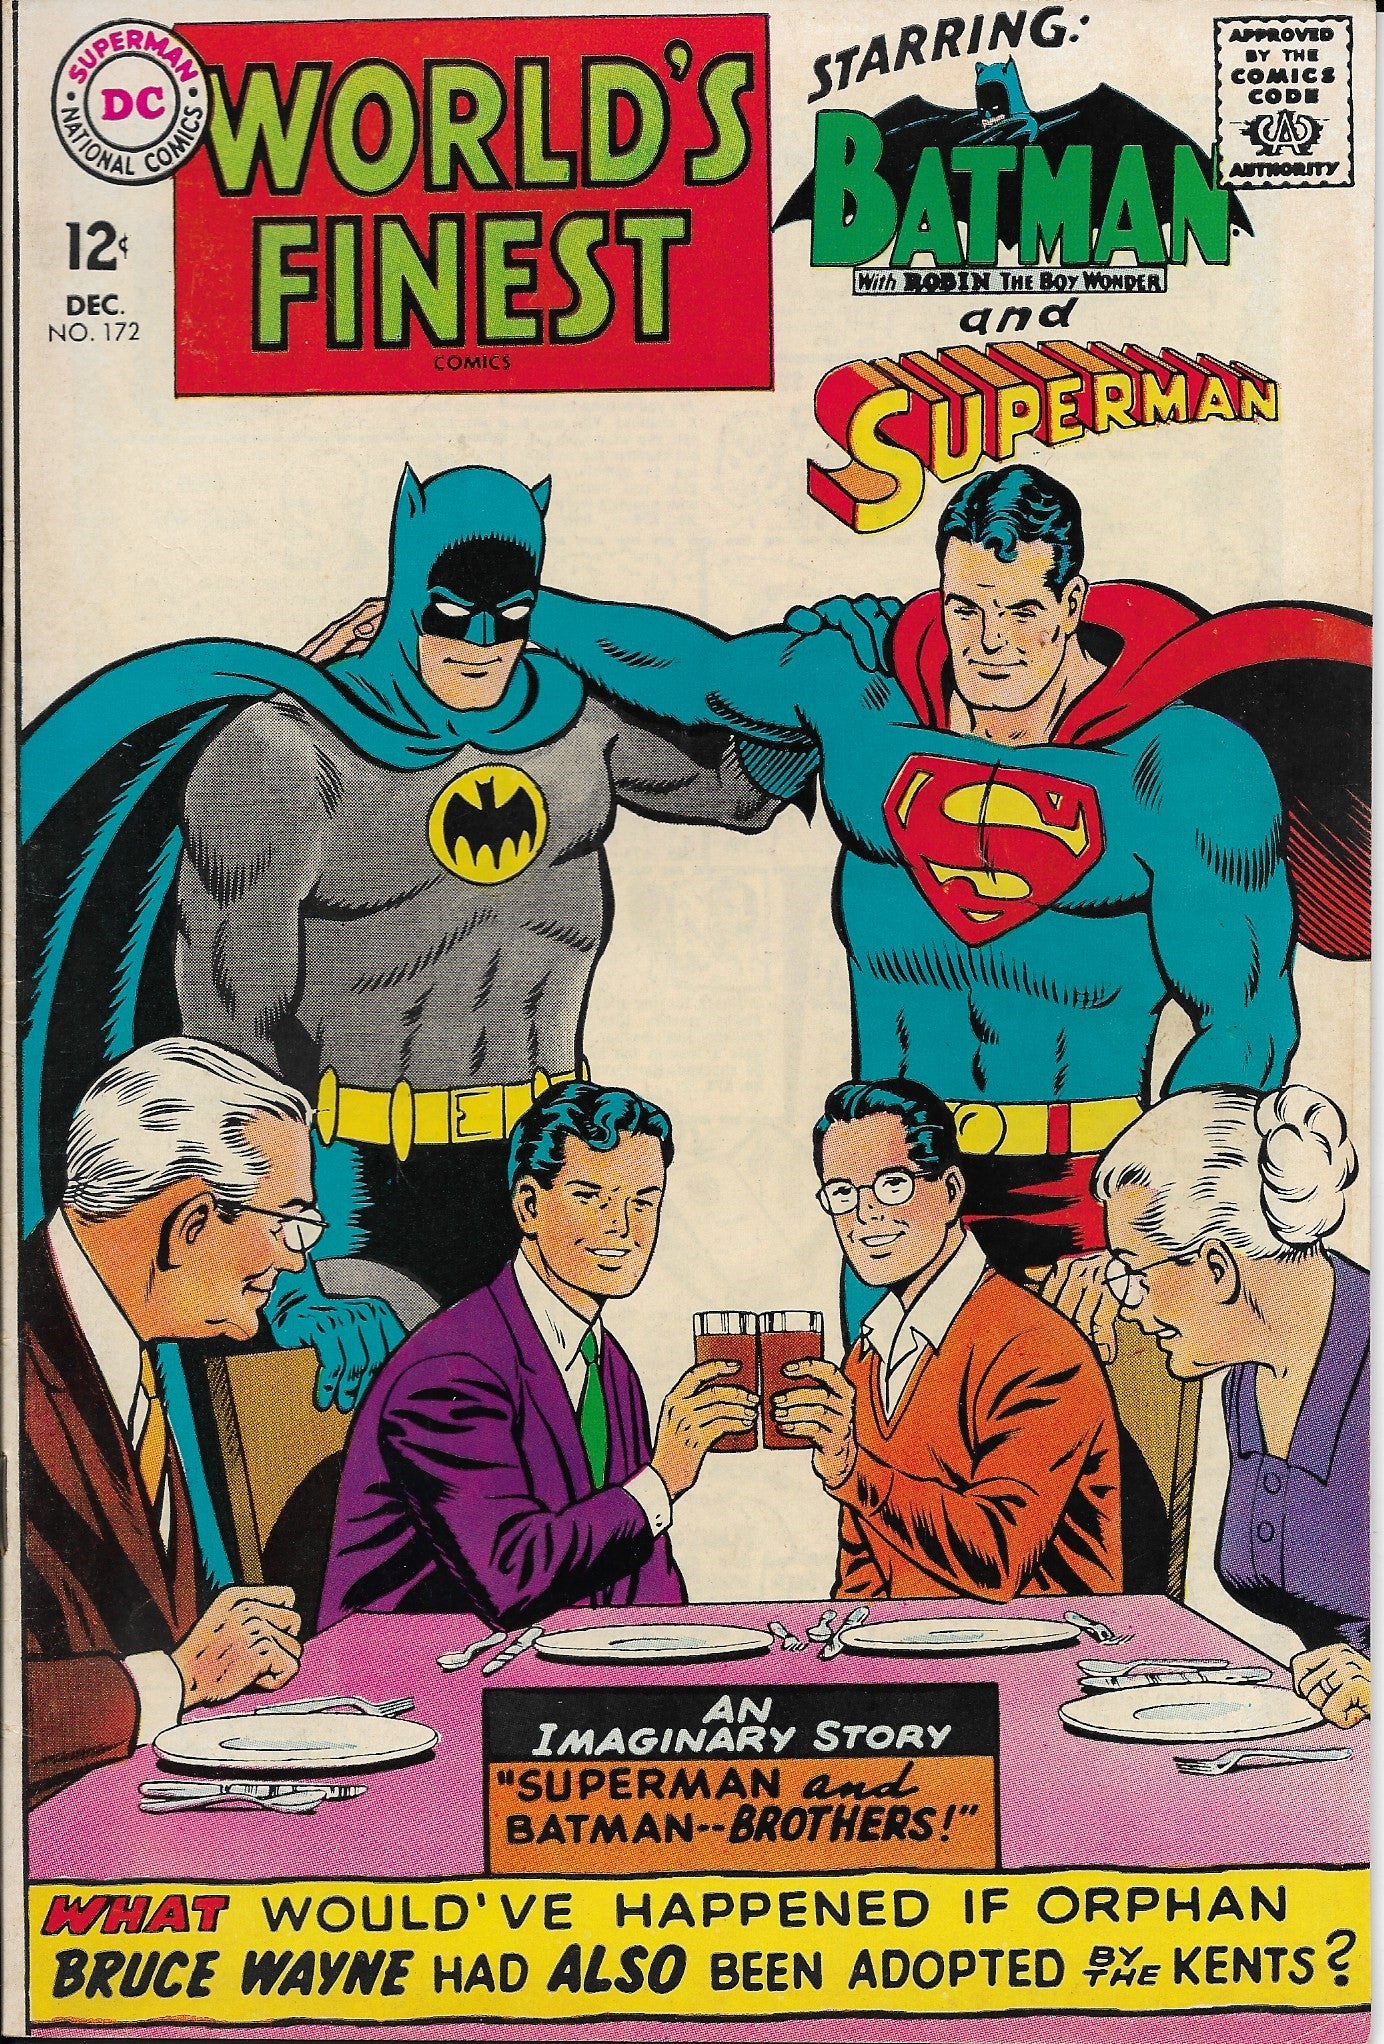 World's Finest No. 172 Starring Batman and Superman, DC Comics, December 1967